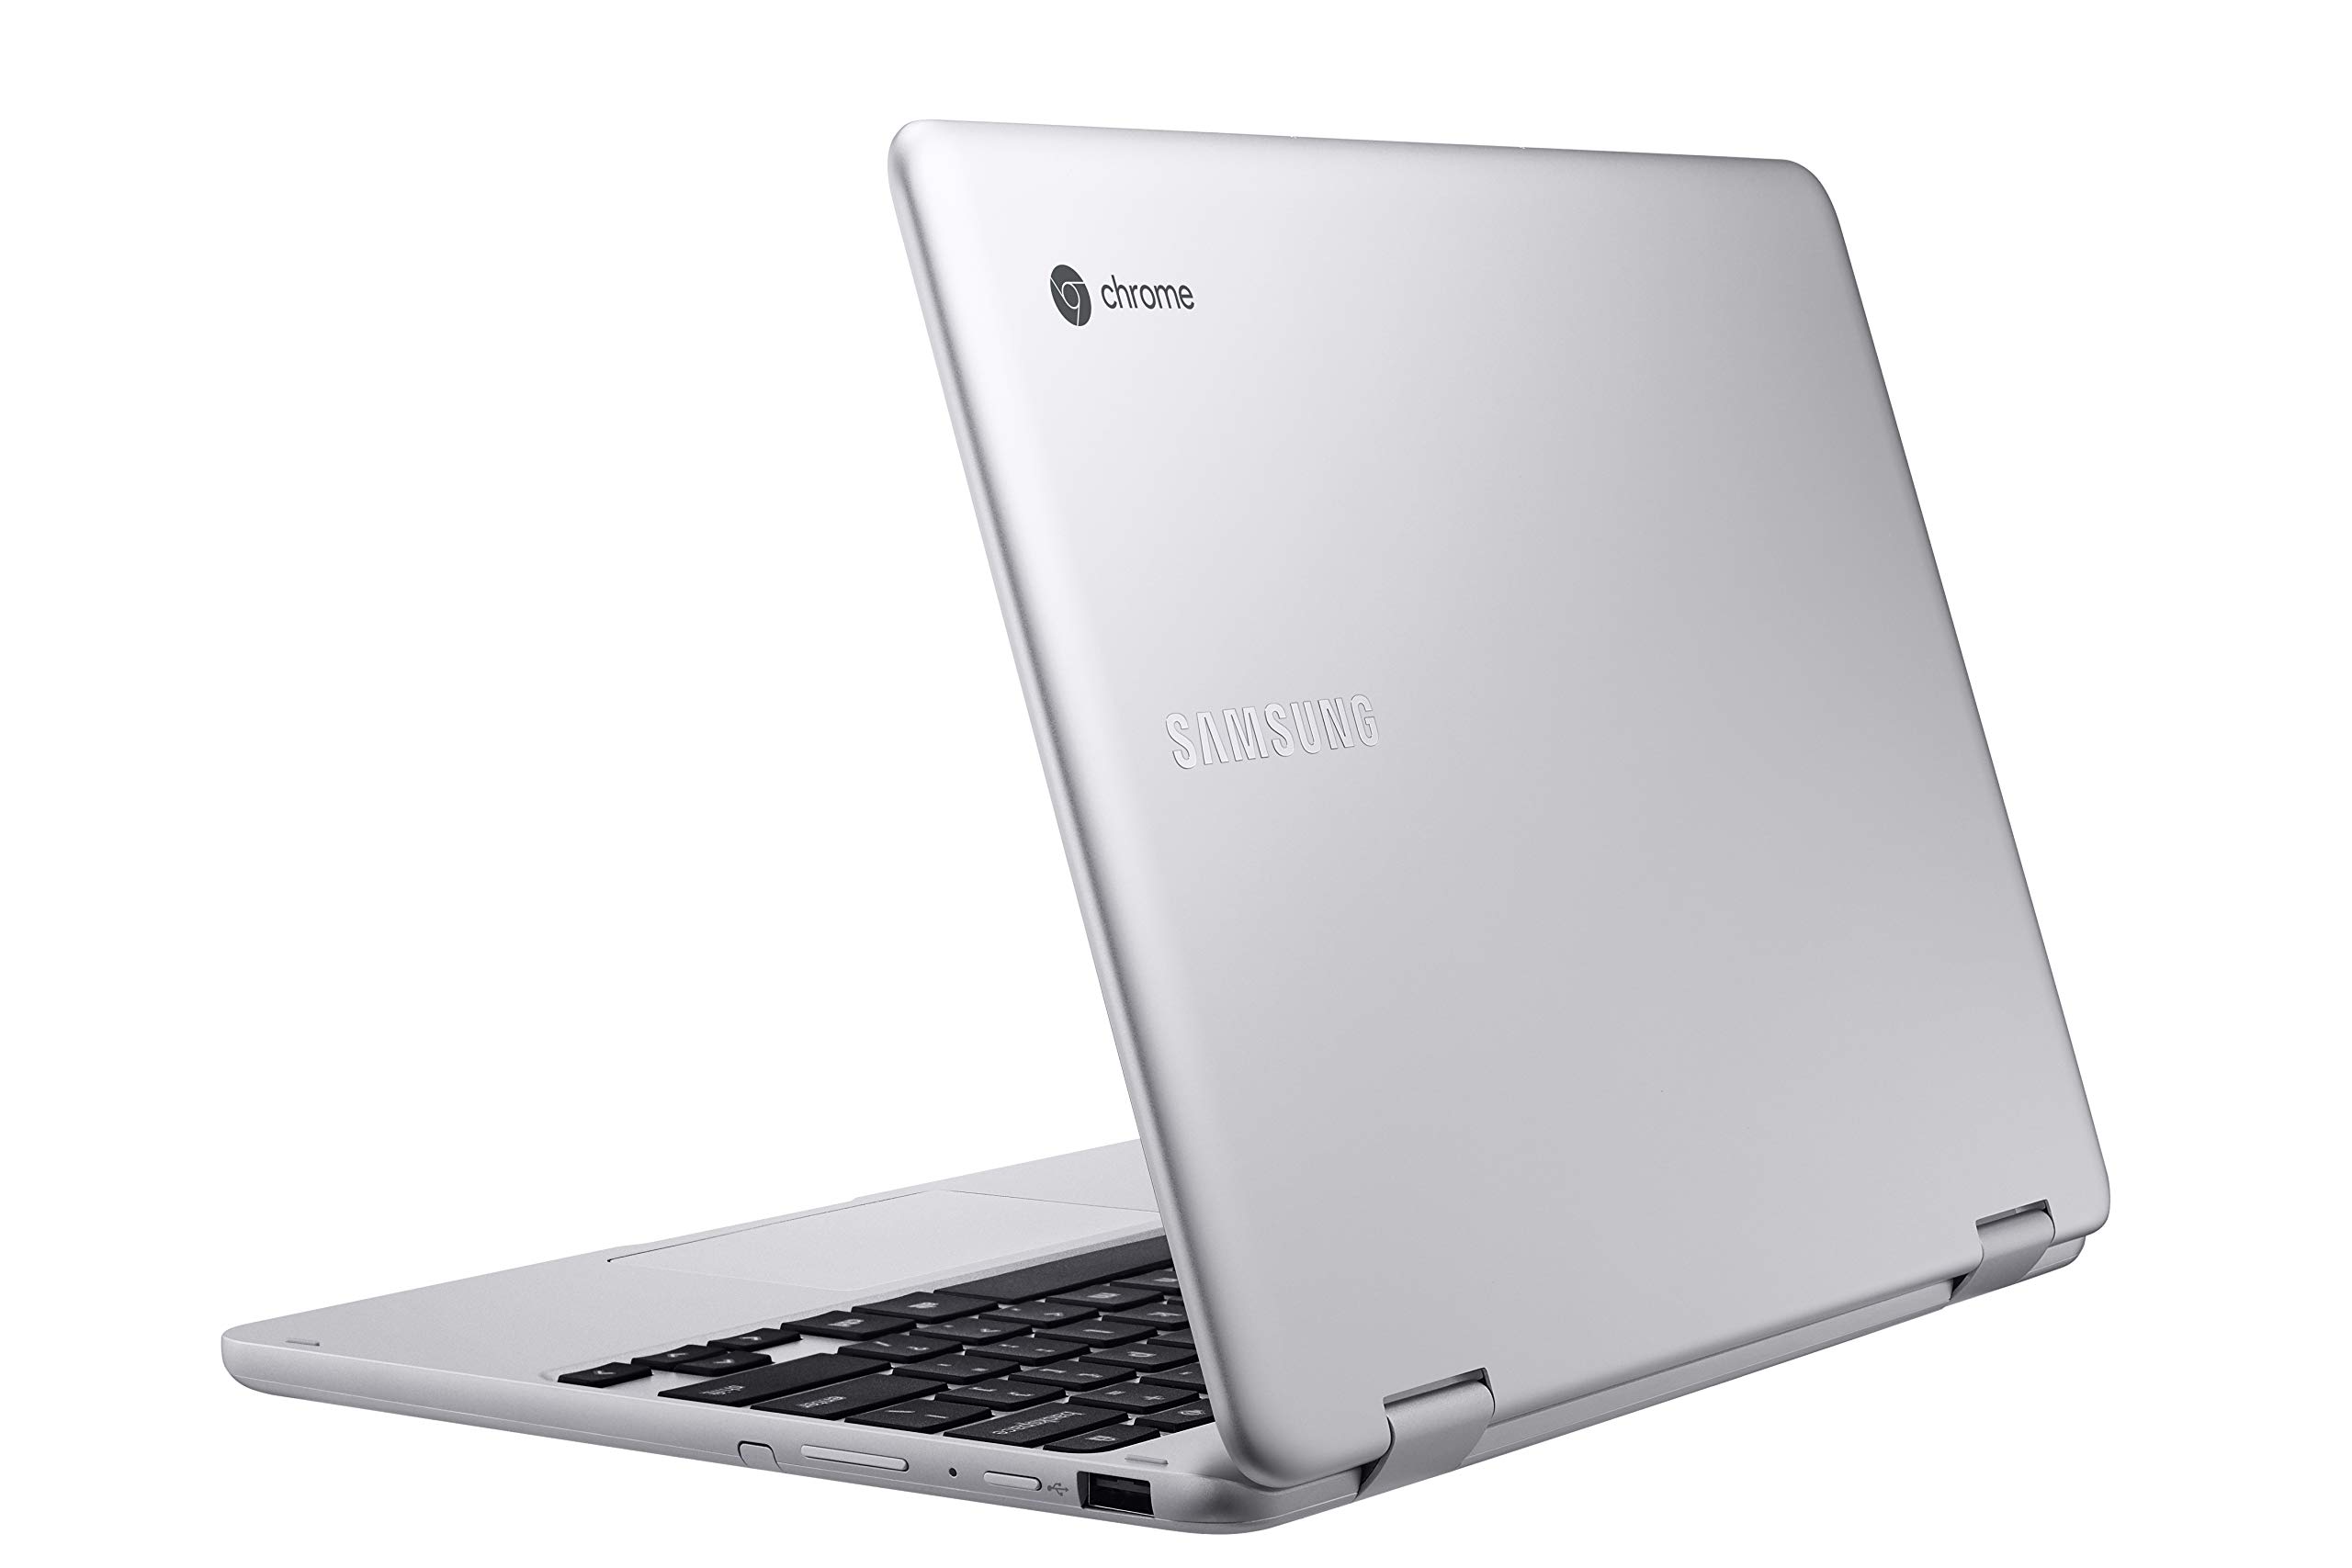 Samsung Chromebook Plus V2 2-in-1 Laptop- 4GB RAM, 64GB eMMC, 13MP Camera, Chrome OS, 12.2